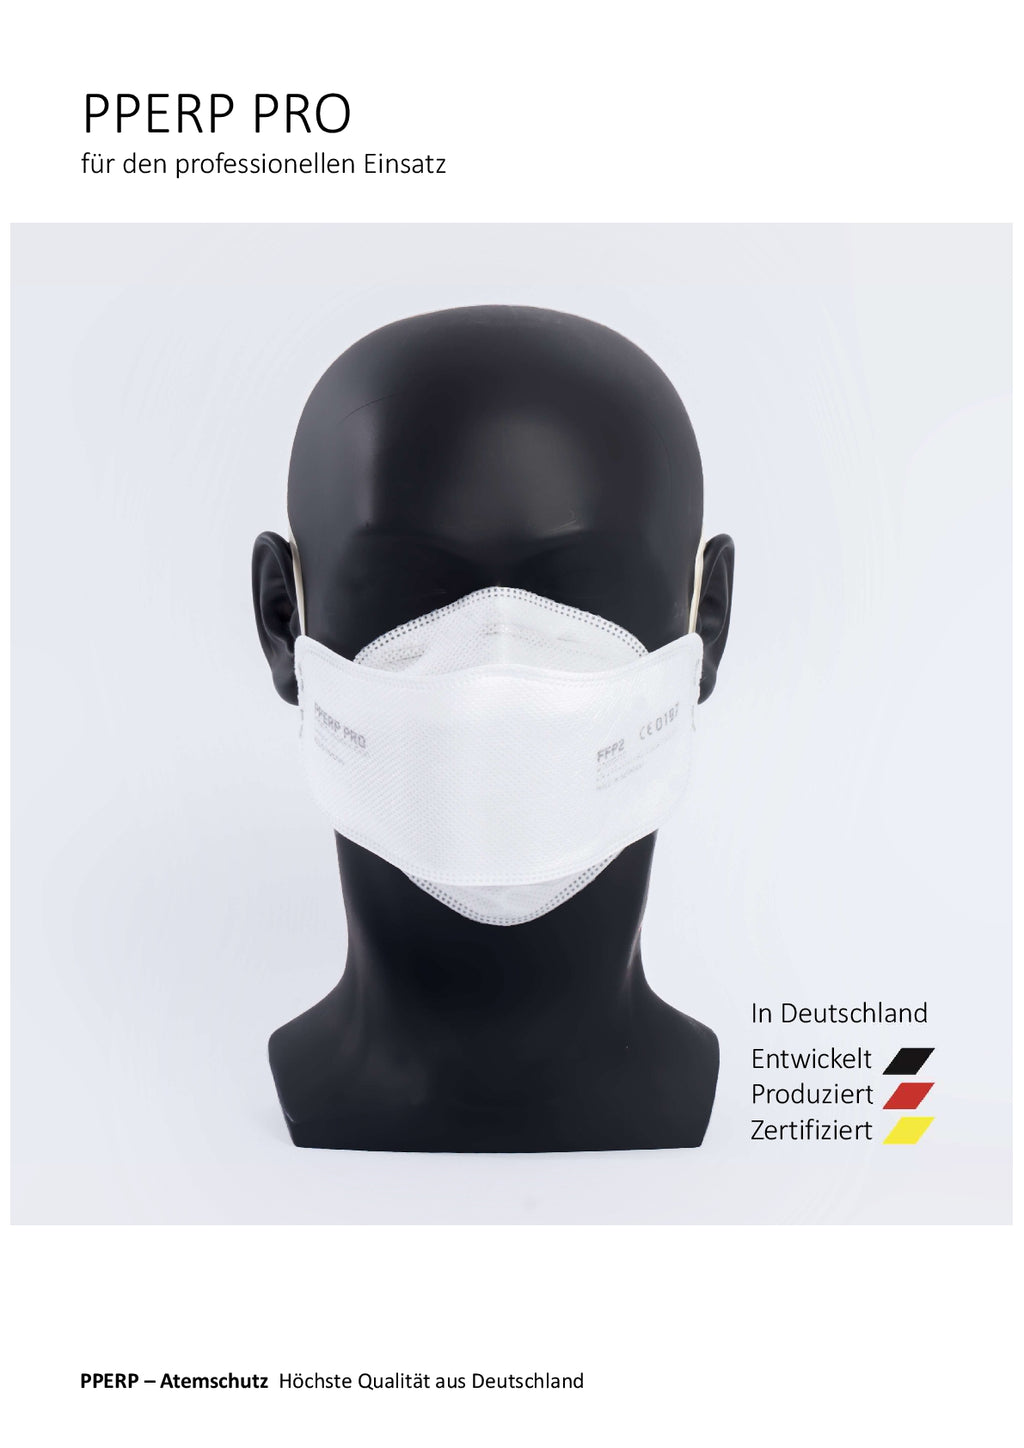 PPERP PRO FFP2 Maske TÜV Rheinland zertifiziert CE0197 12 Stück (Preis: 2,25€/Maske)